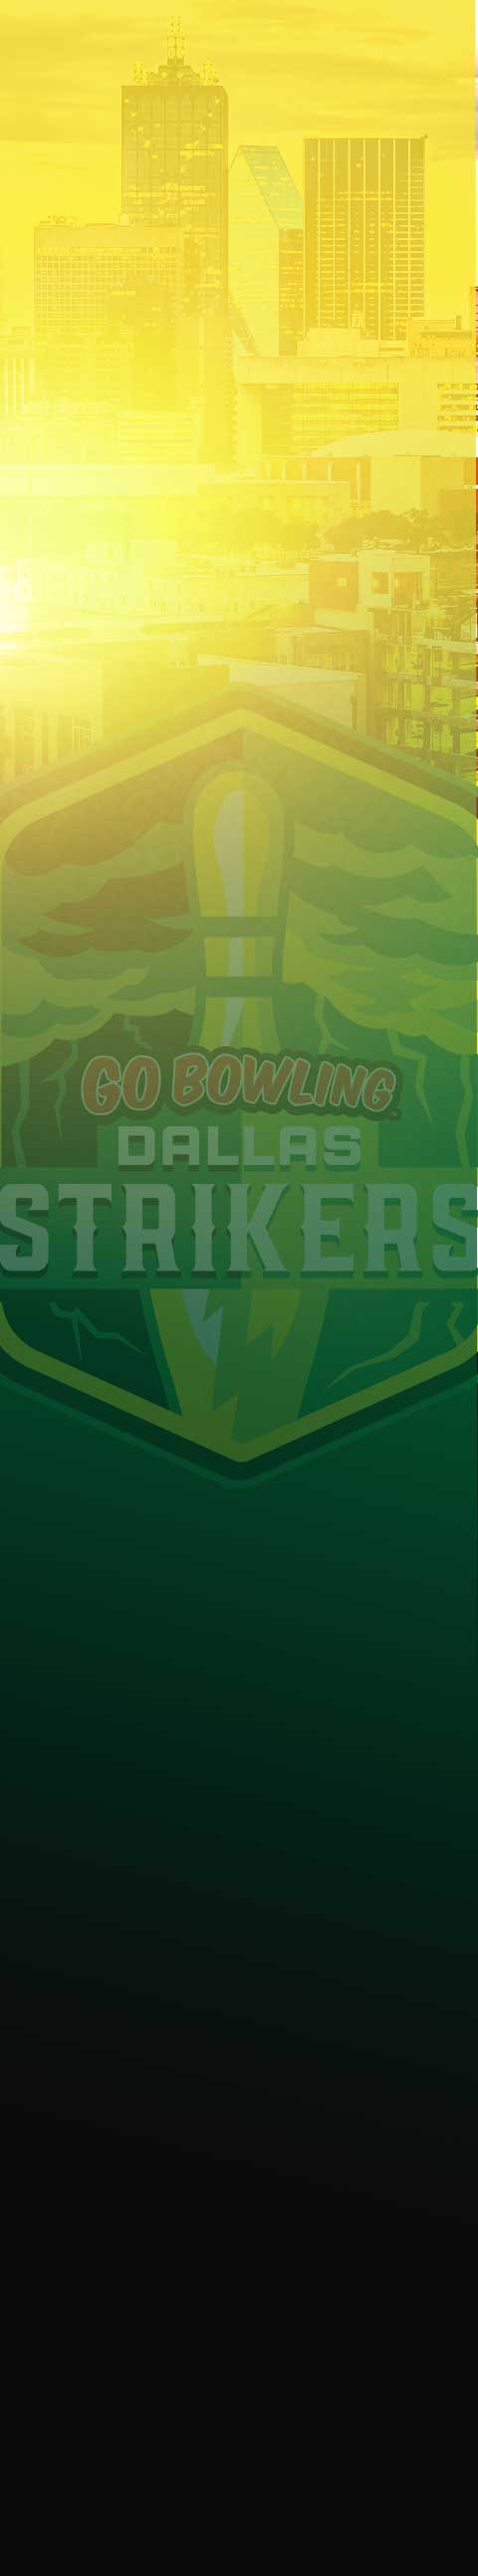 PBA League - Go Bowling! Dallas Strikers